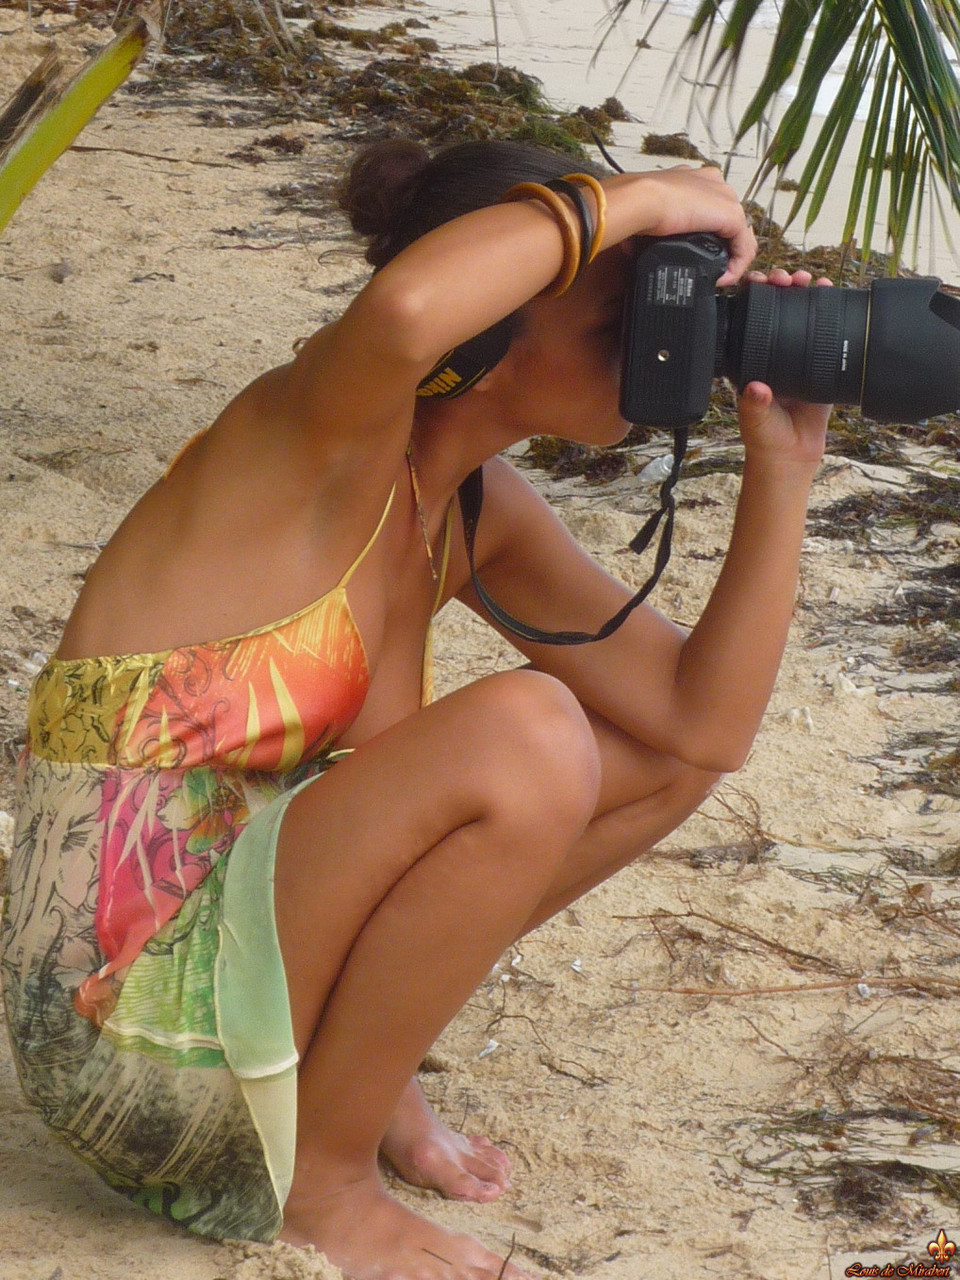 Beautiful girls work free of their swimwear while modeling on a tropical beach ポルノ写真 #424108093